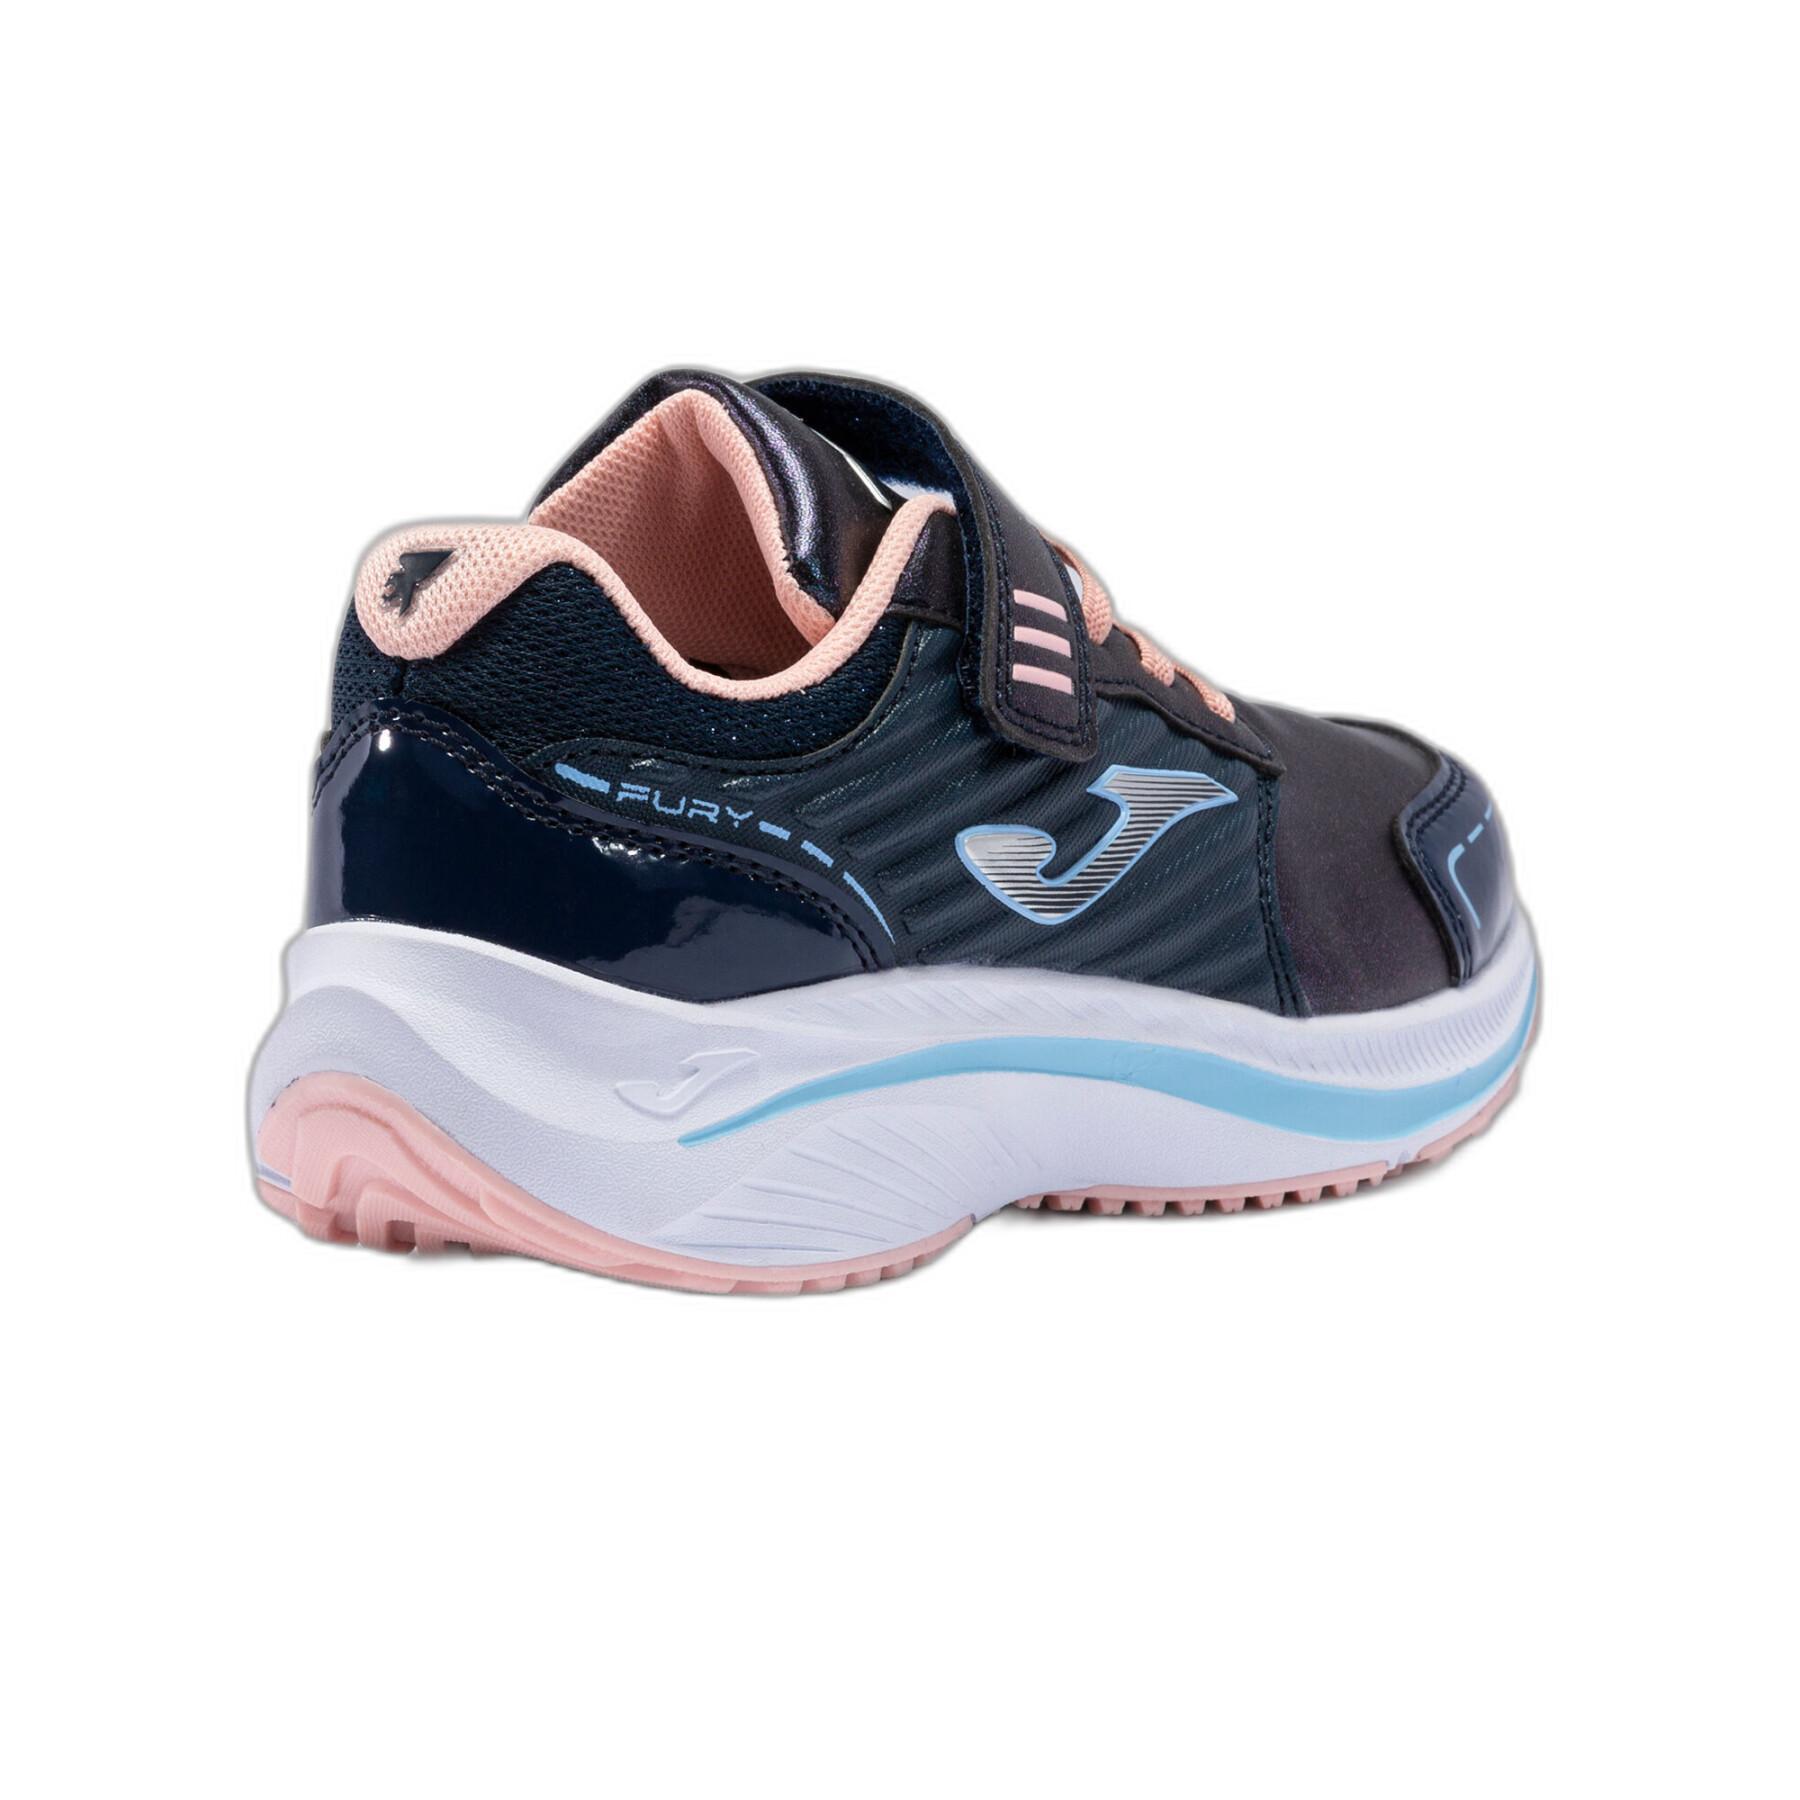 Chaussures de running enfant Joma Fury 2243